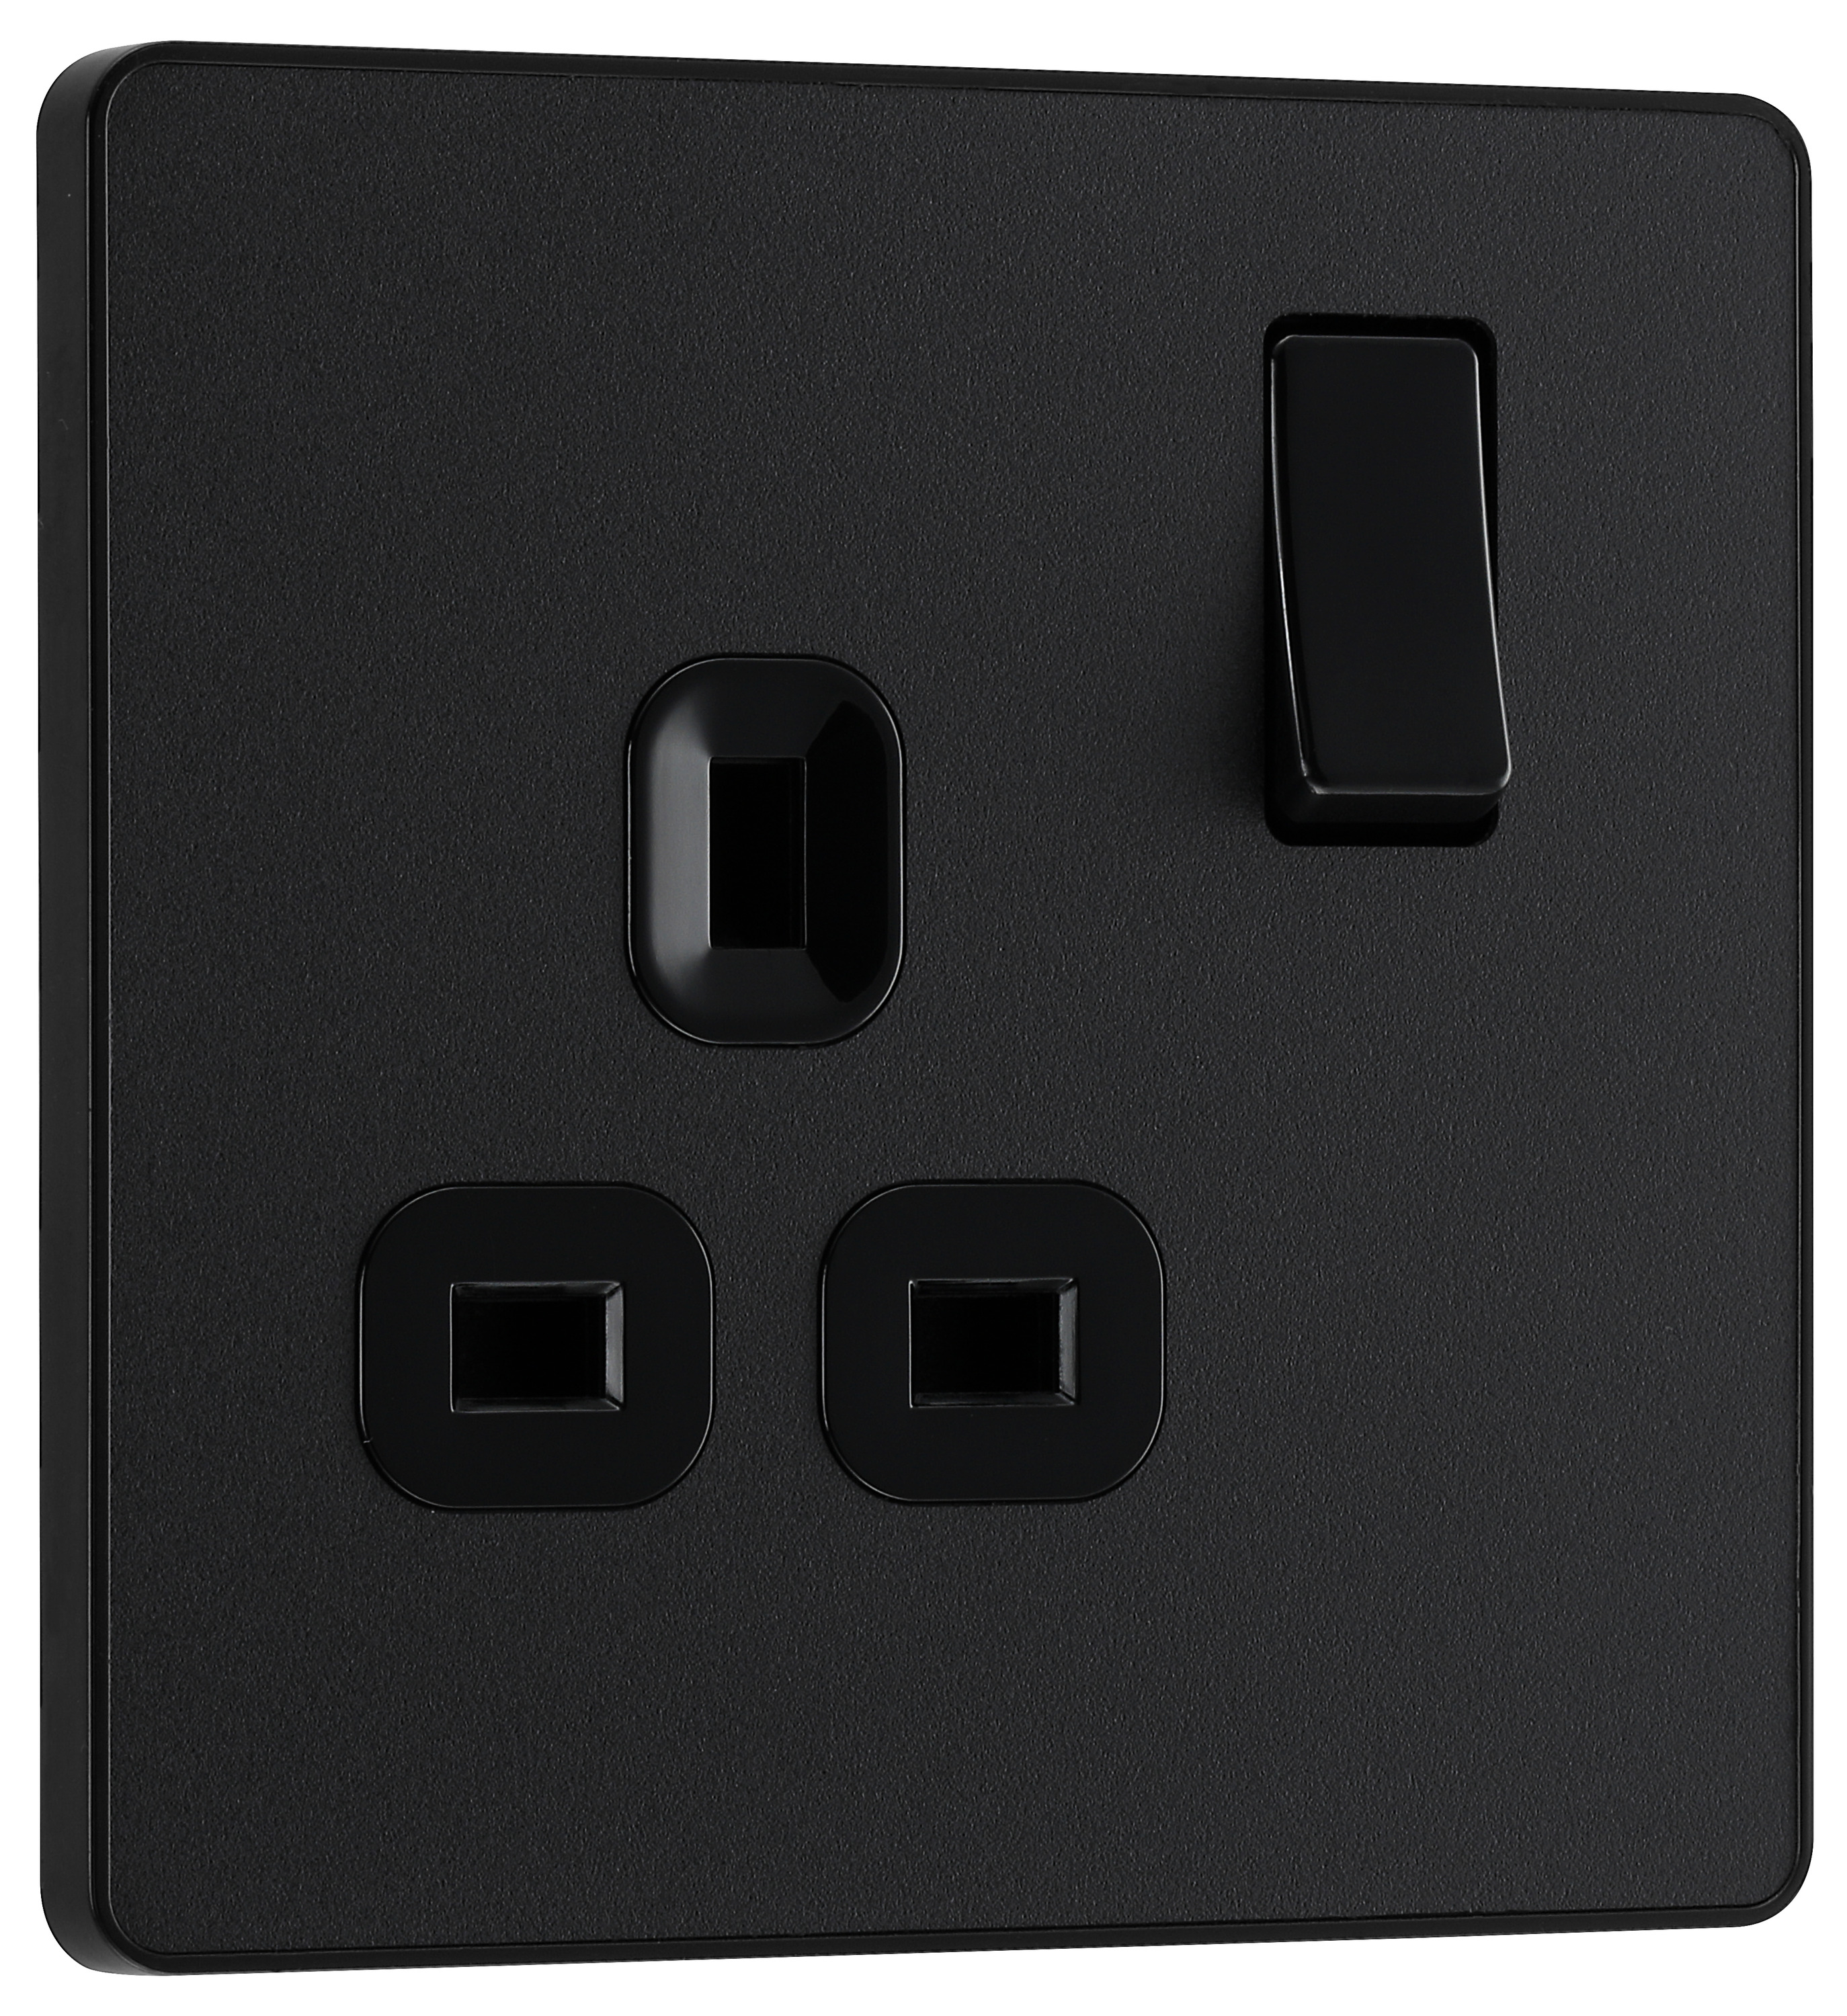 BG Evolve Matt Black 13A Single Switched Power Socket